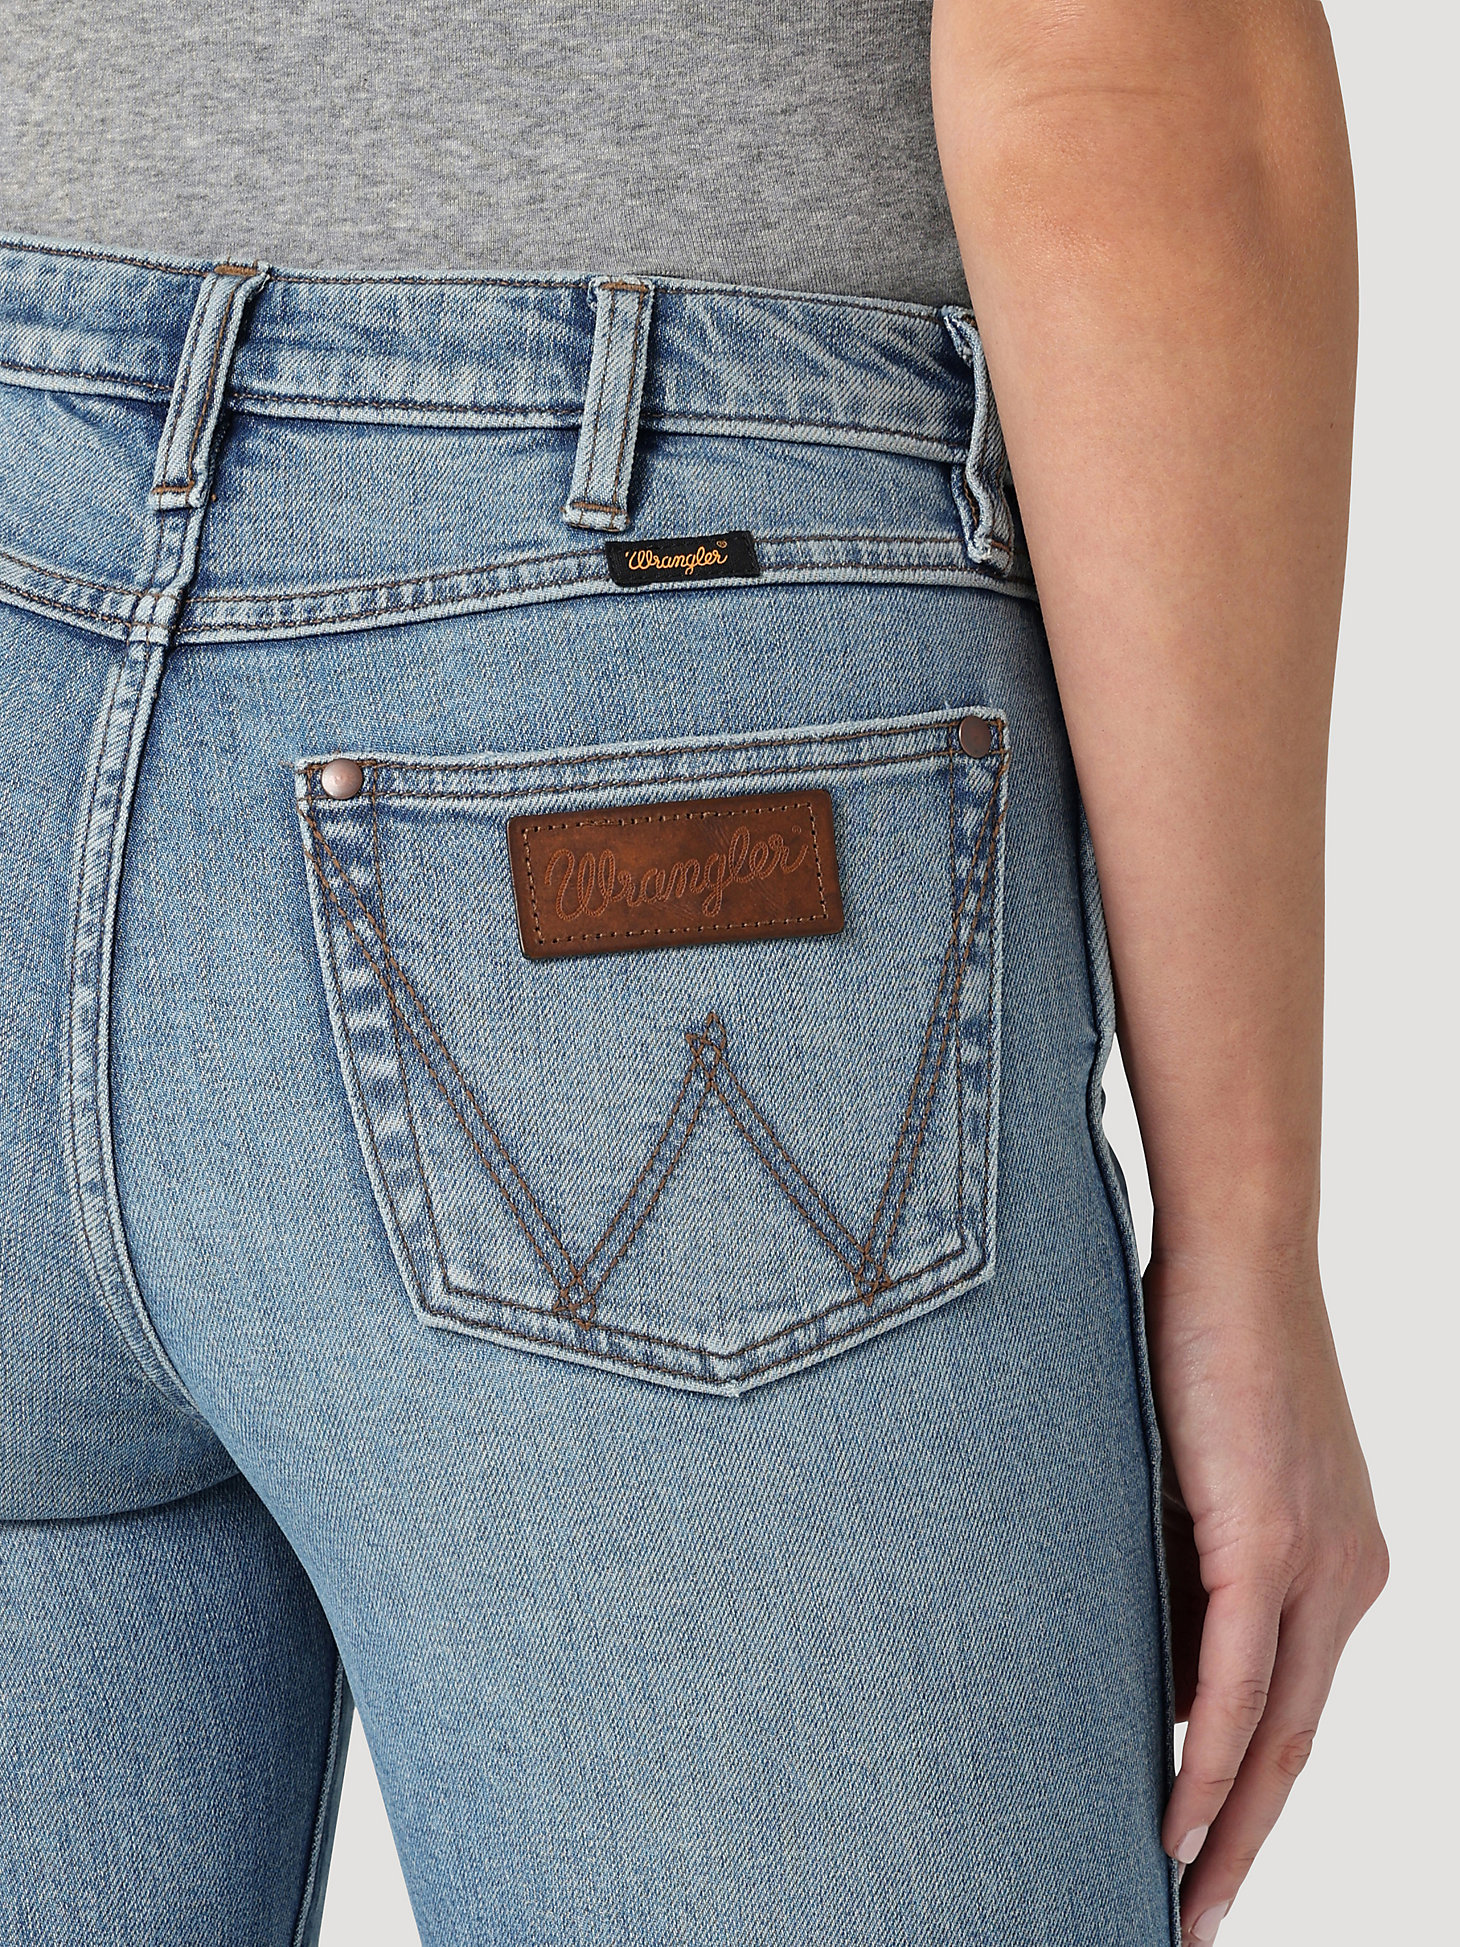 Women's Wrangler Retro Premium High Rise Released Hem Trouser Jean in Wilma alternative view 3